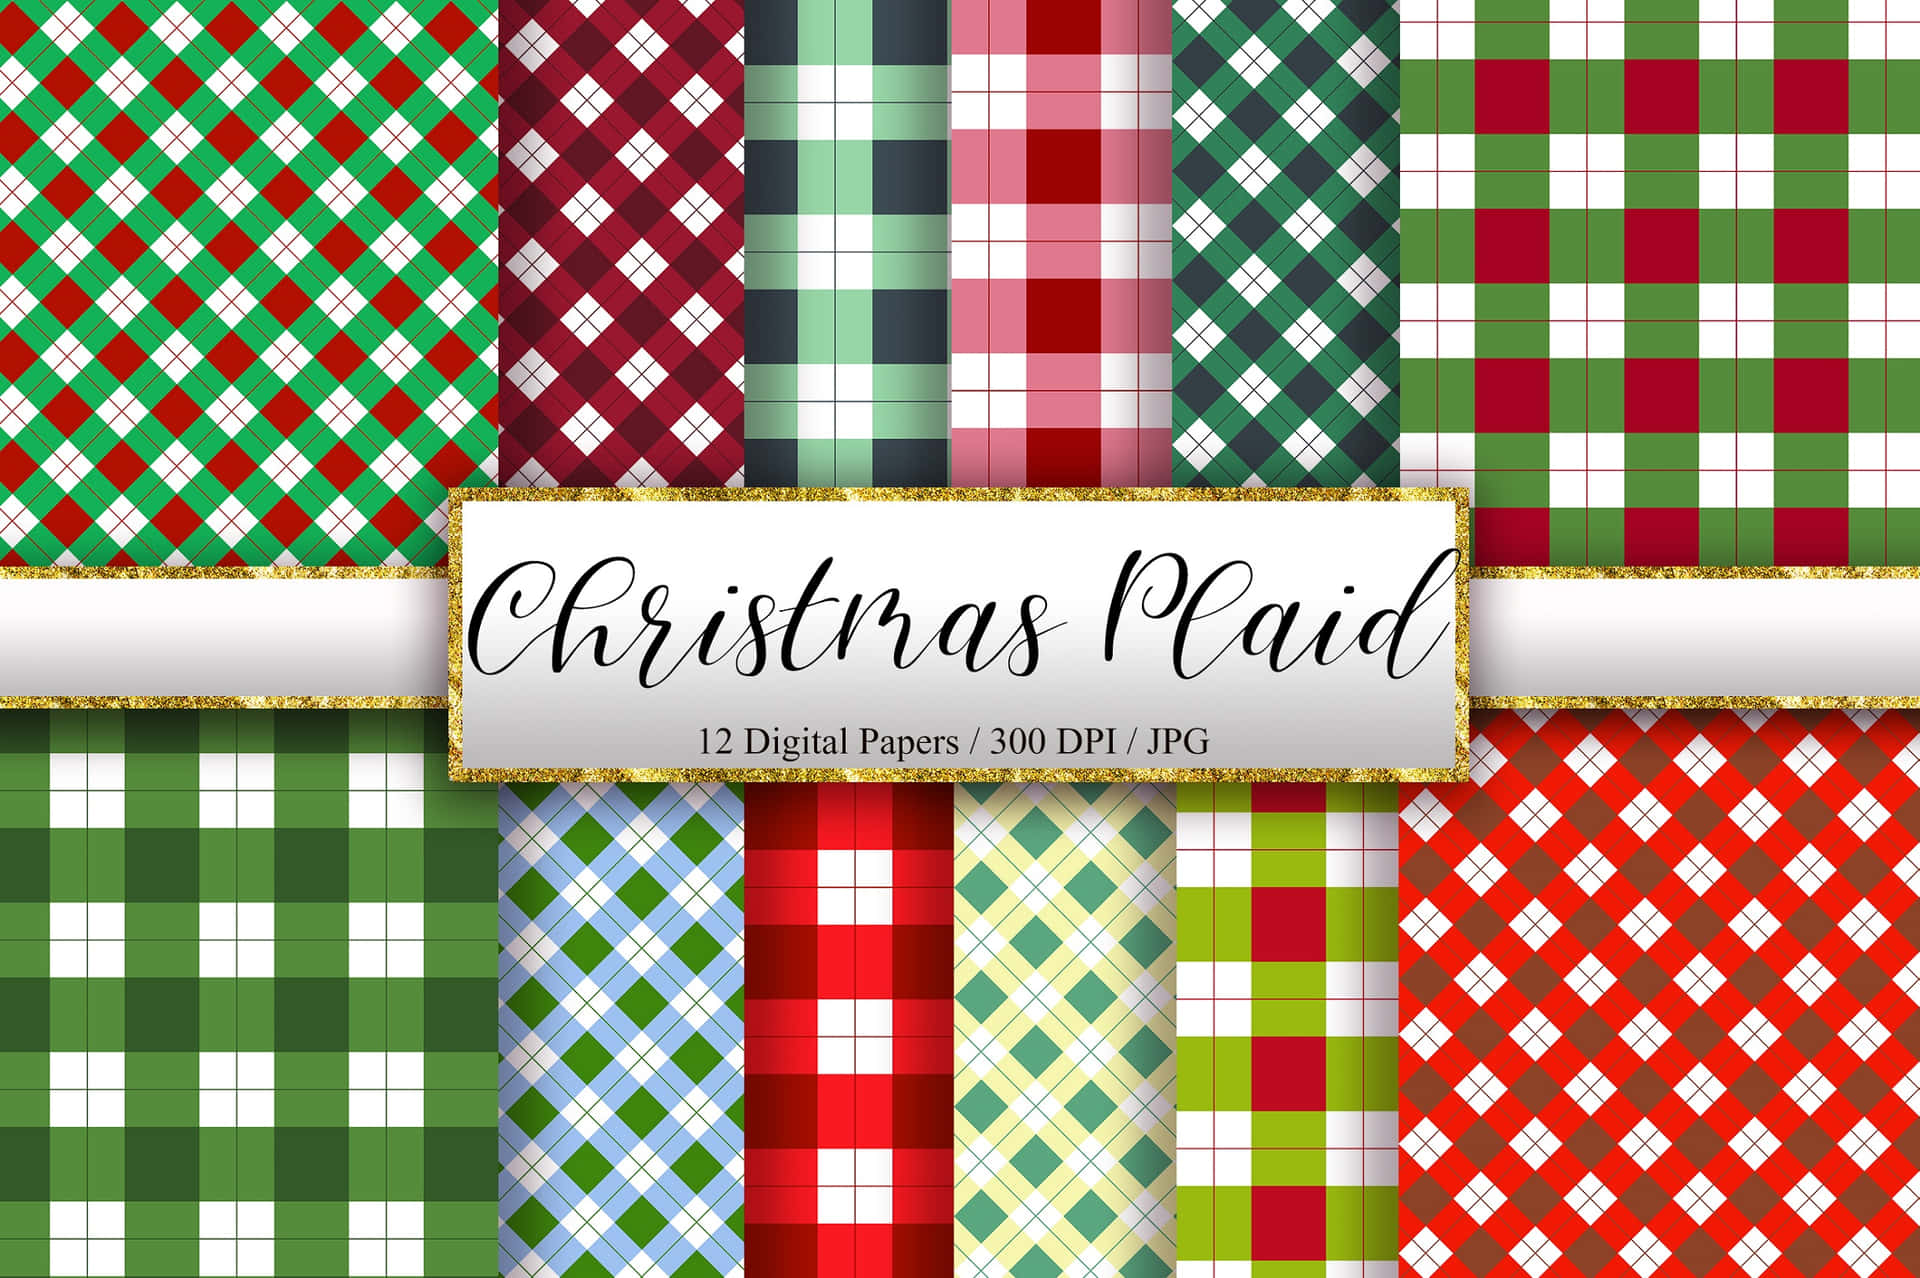 100+] Christmas Plaid Backgrounds